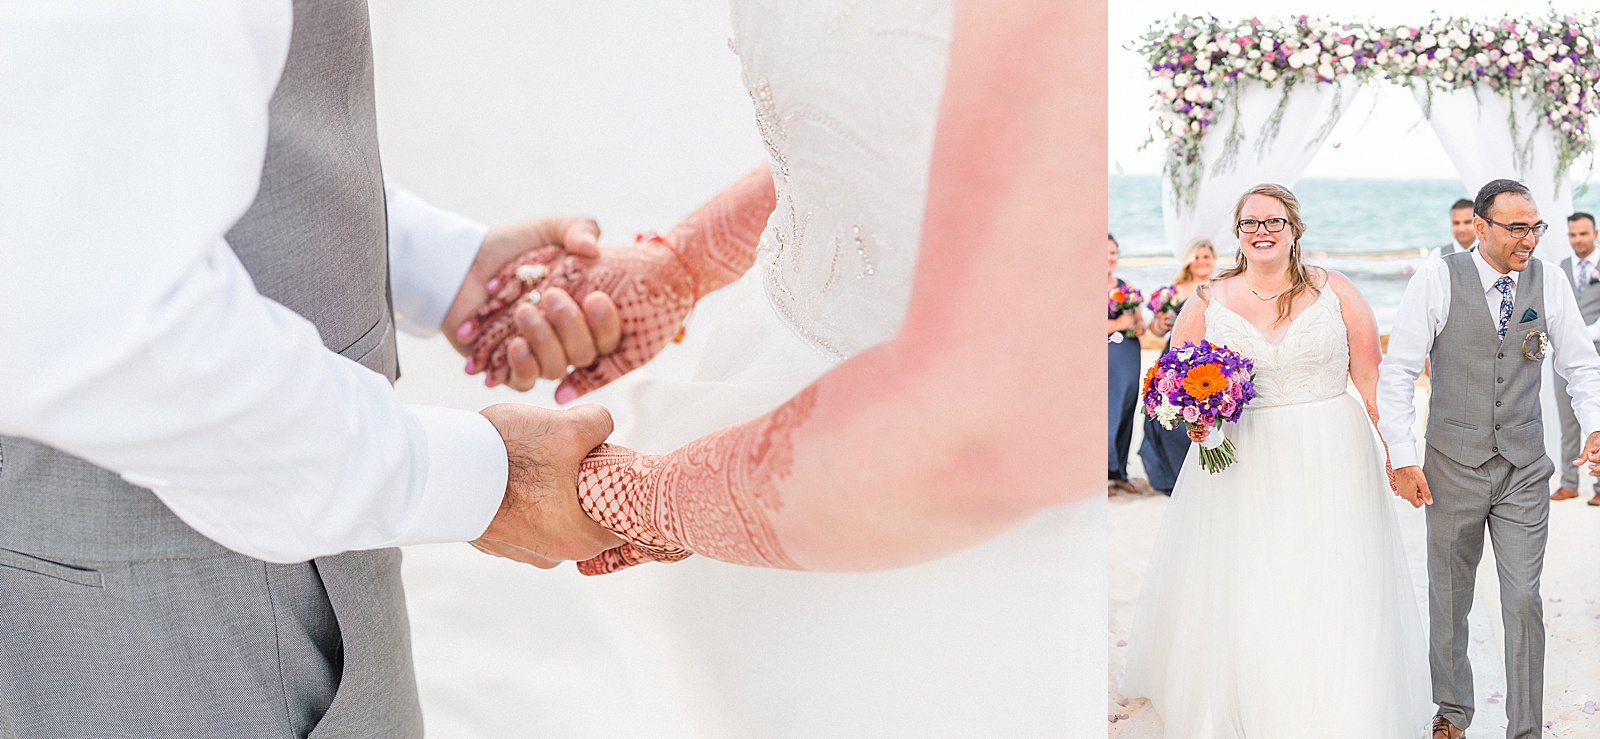 Wedding on a beach in Cancun Mexico